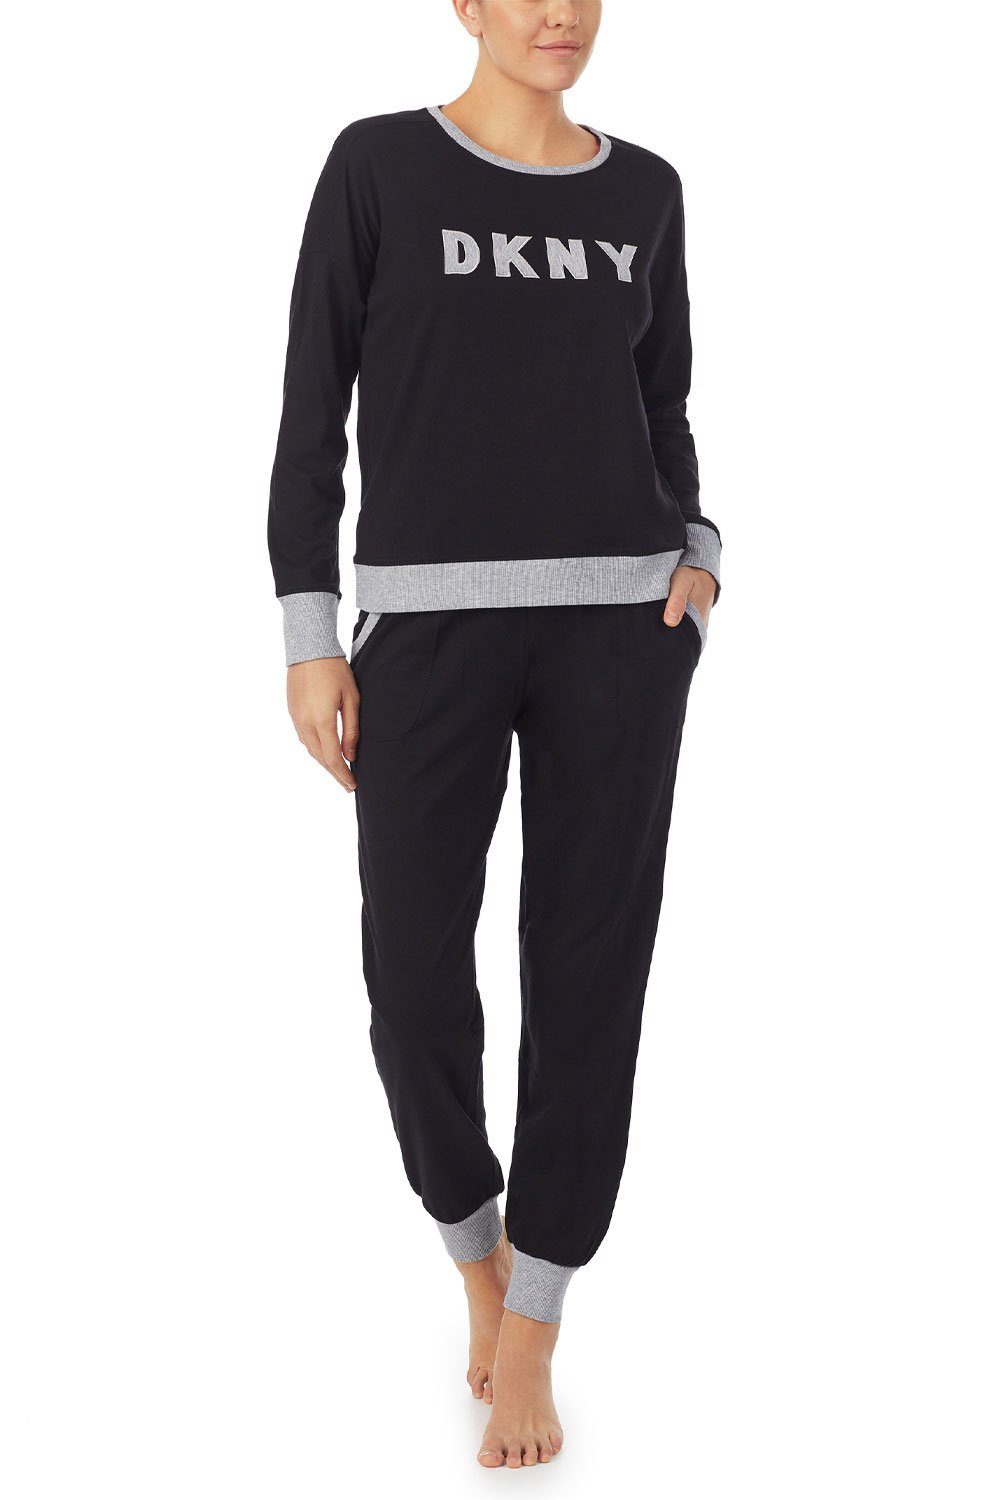 & black Top DKNY Pyjama YI2919259 Set Jogger